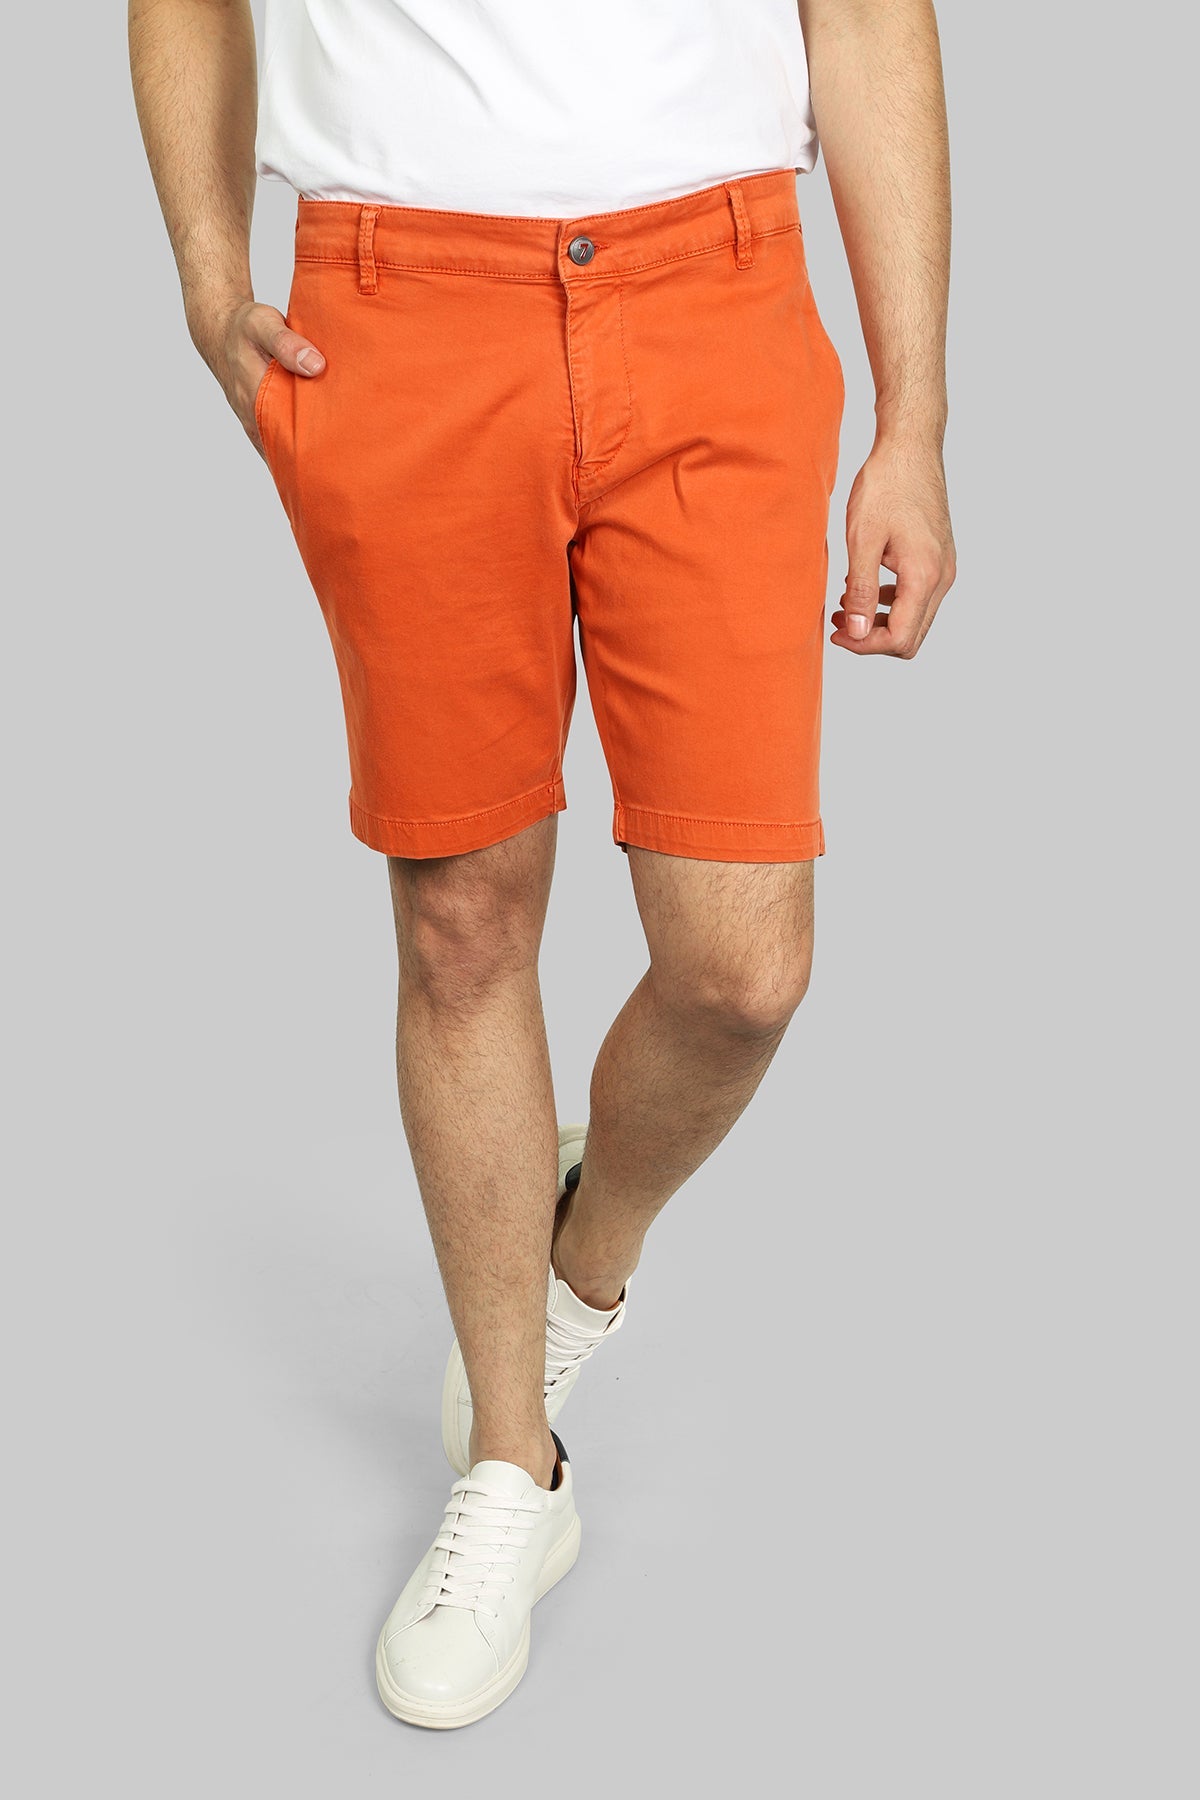 Orange Shorts – Ivy Styles